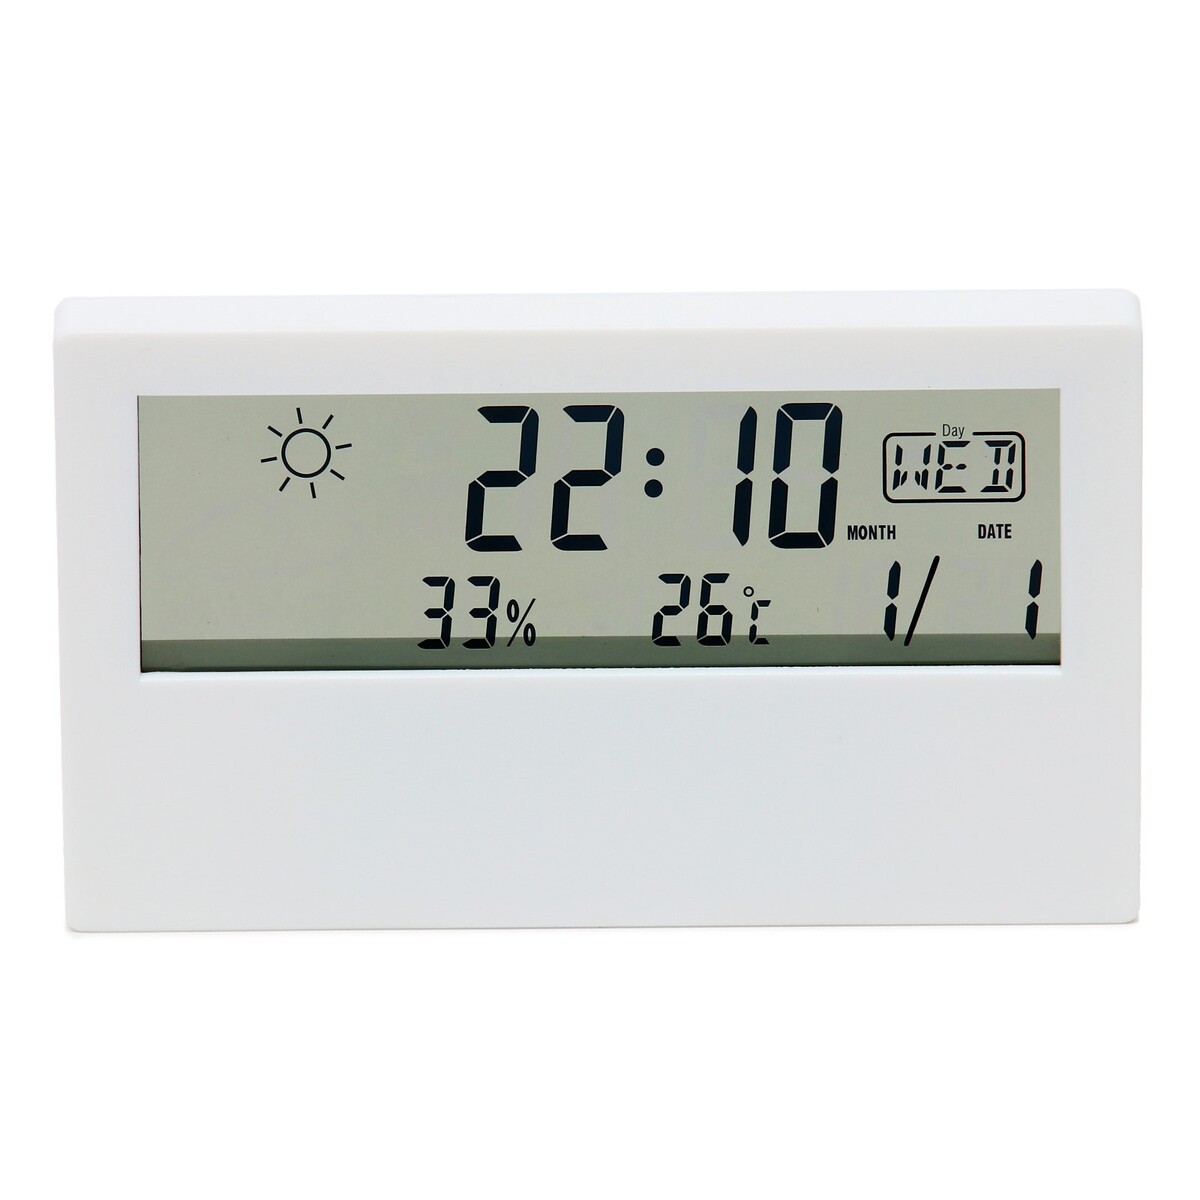 Часы настольные электронные: будильник, термометр, календарь, гигрометр, 13.3х7.4 см, белые No brand